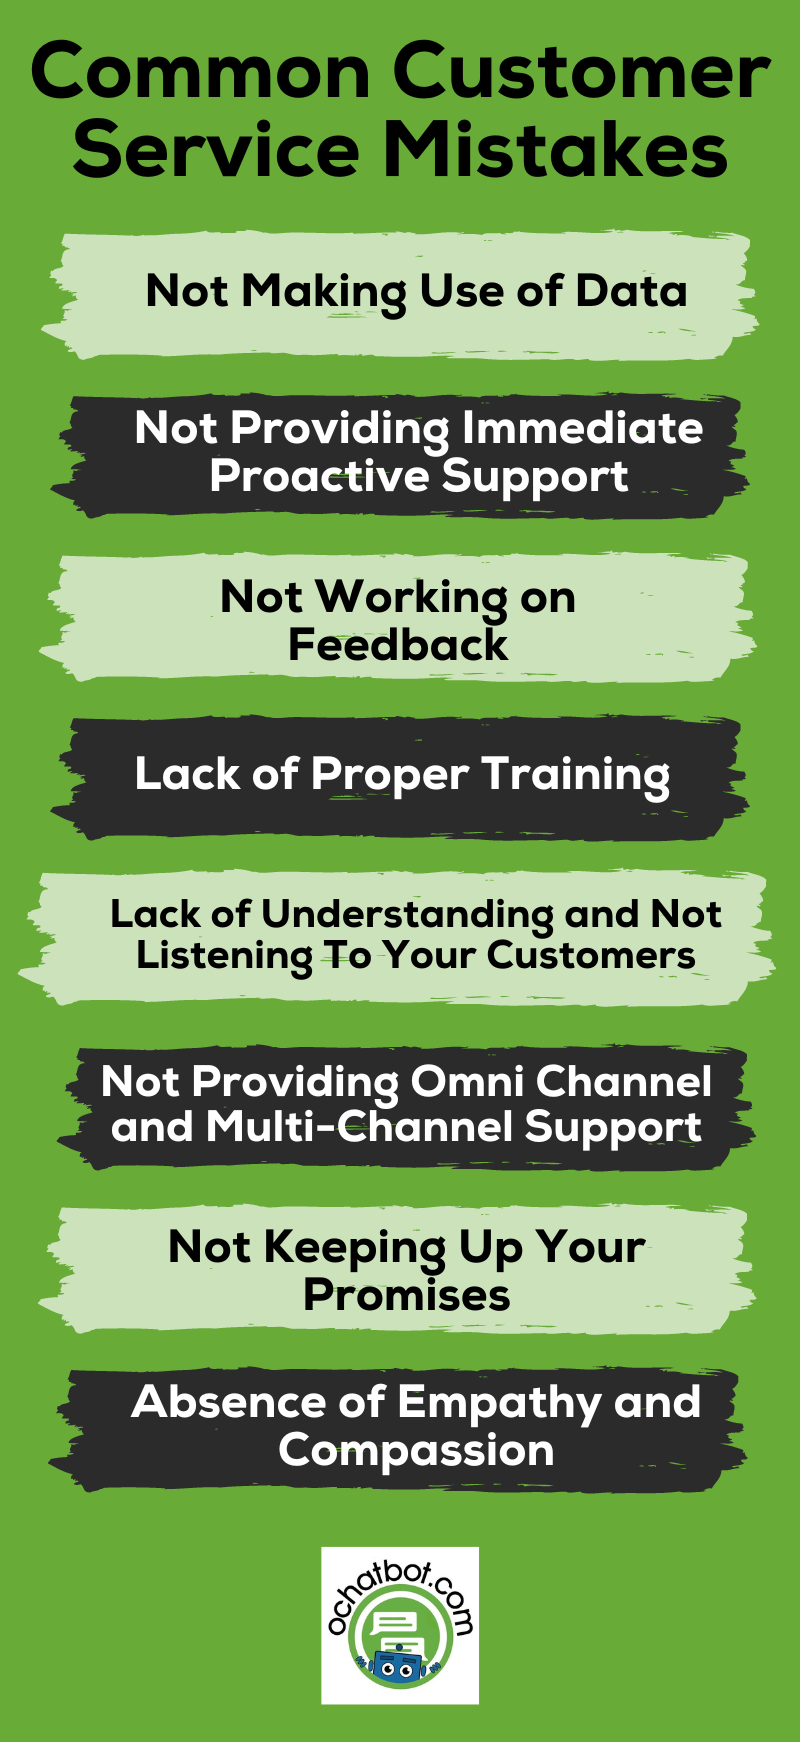 8 Common Customer Service Mistakes